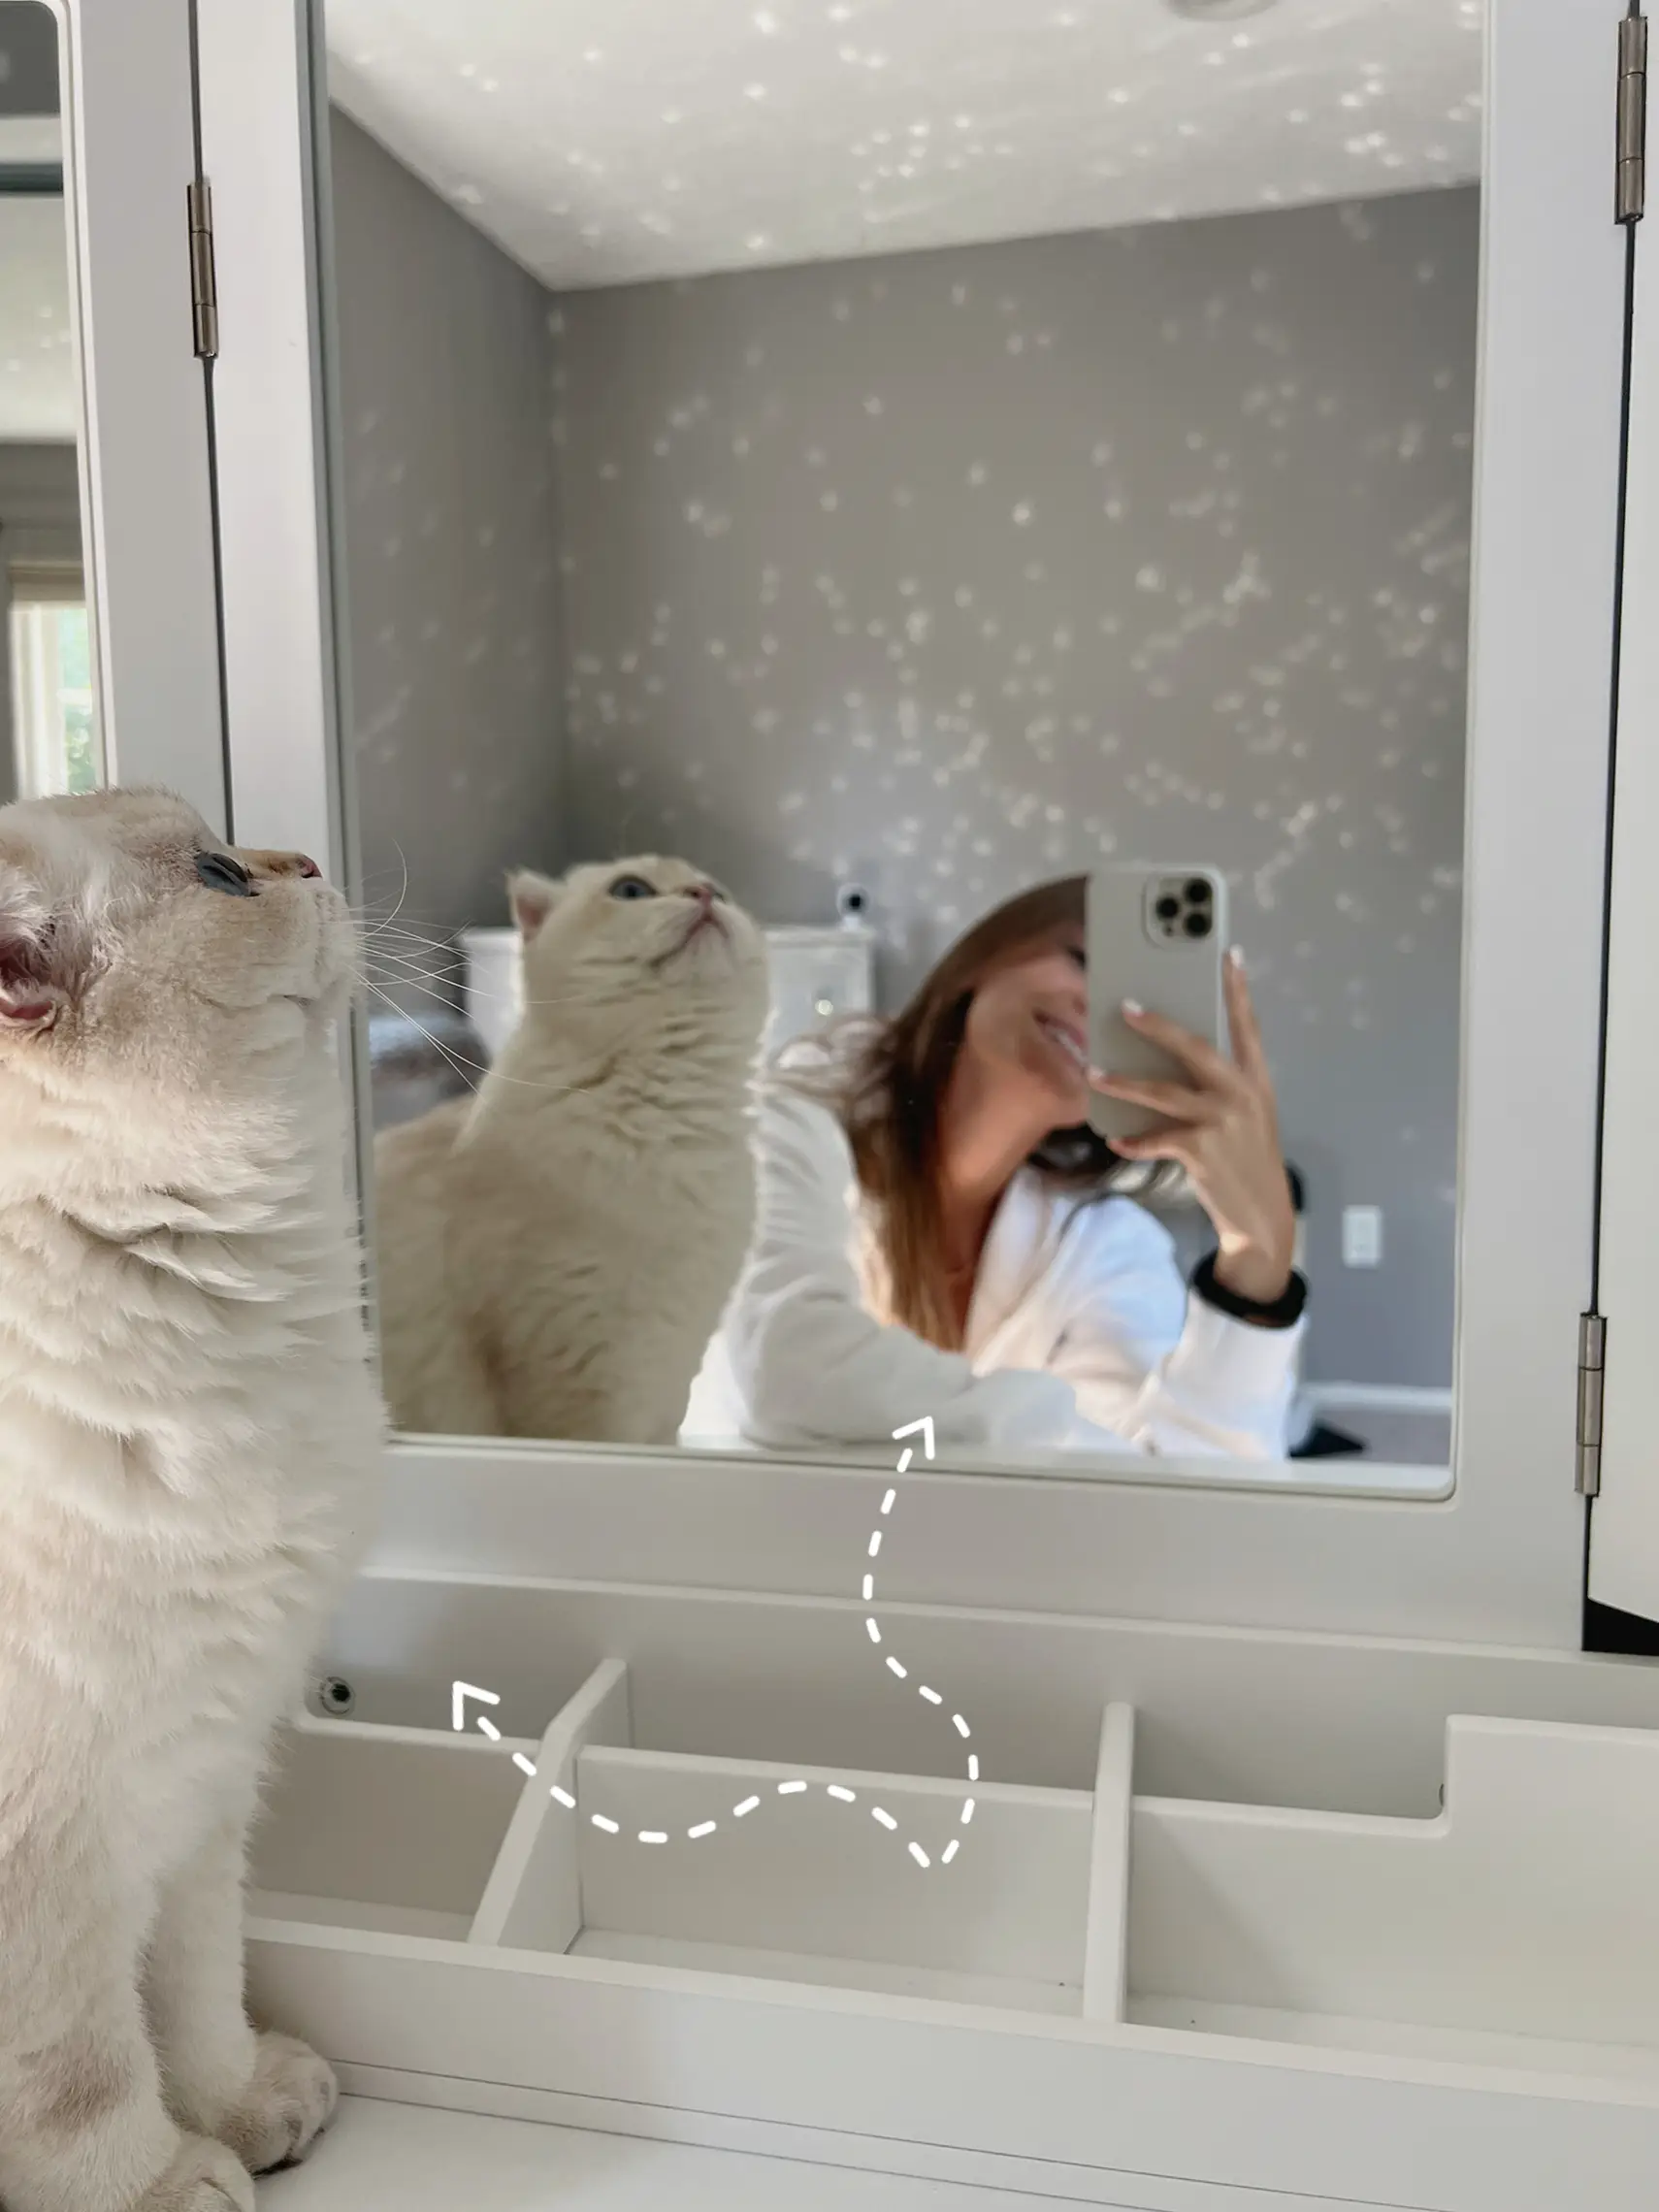 mirror selfie with pet - Lemon8 Search